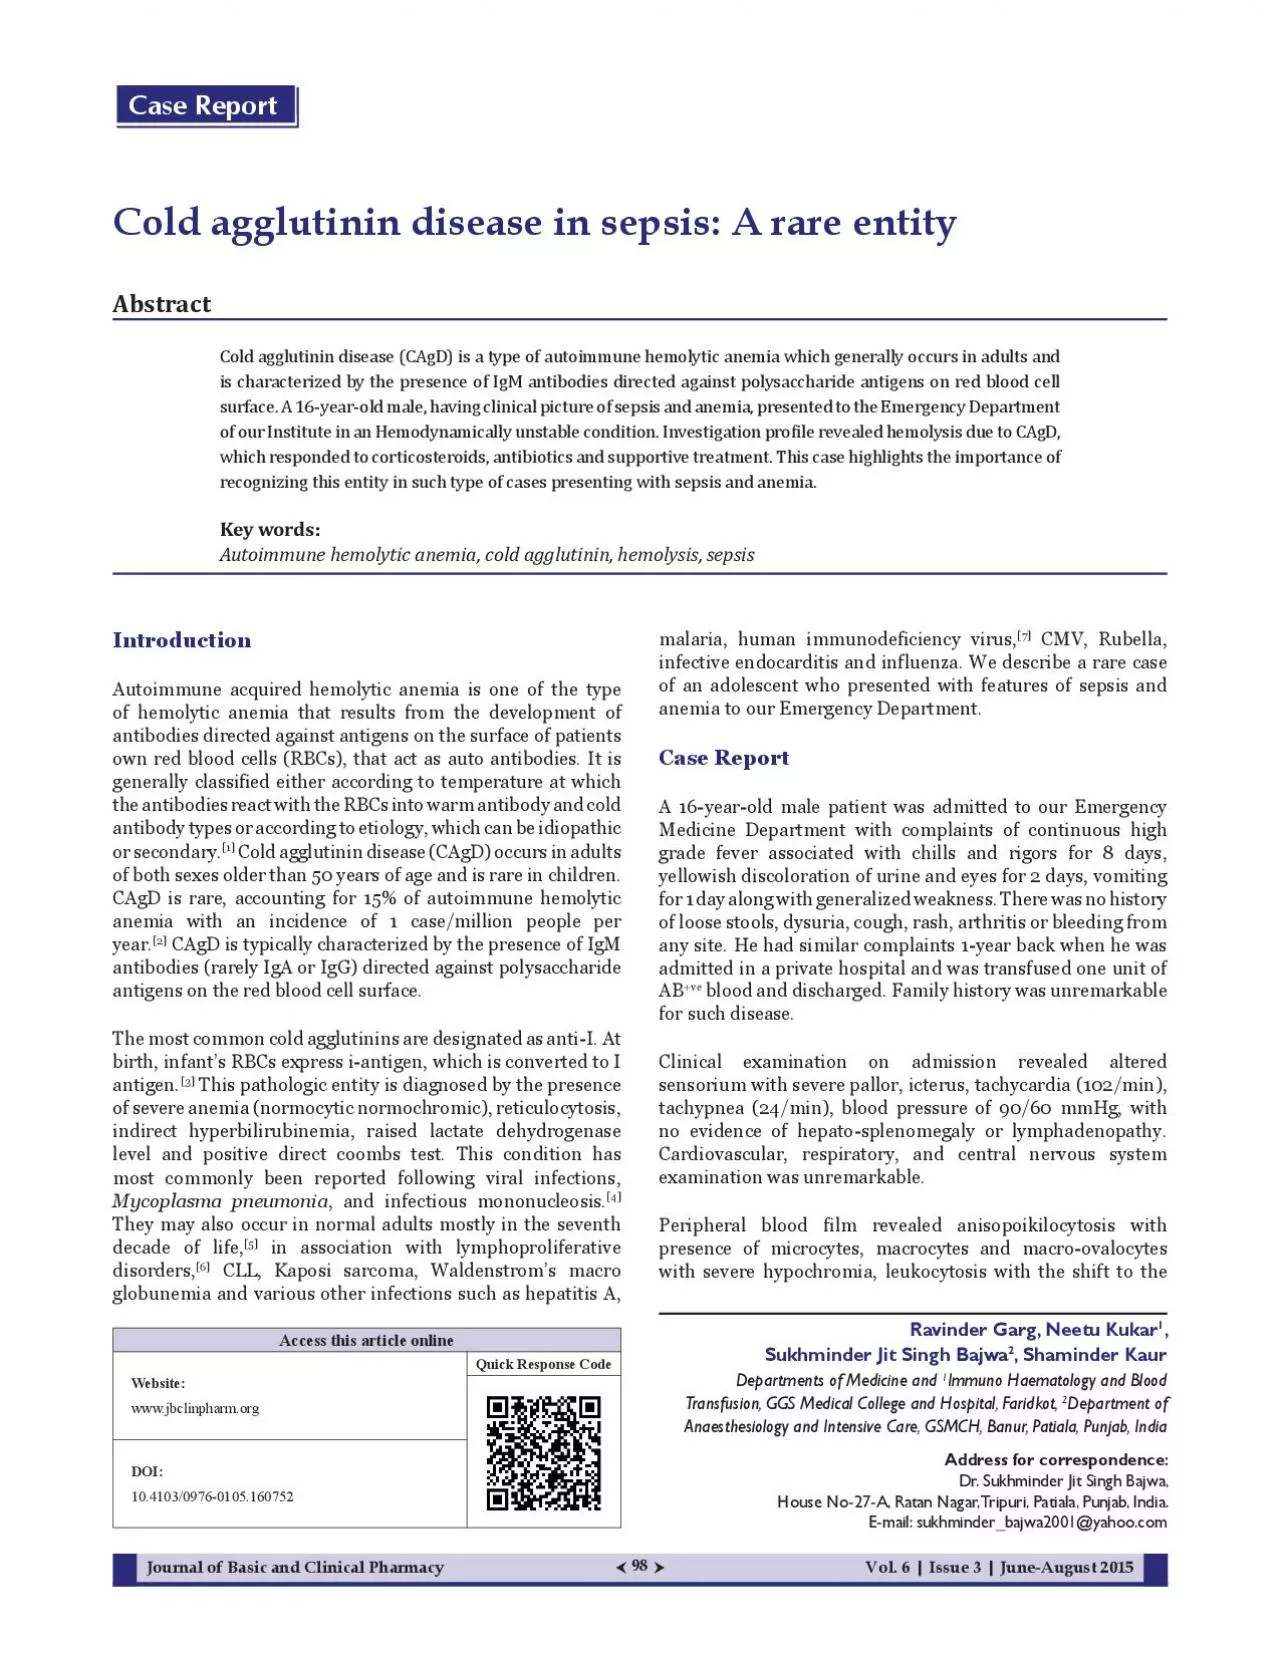 Cold agglutinin disease in sepsis A